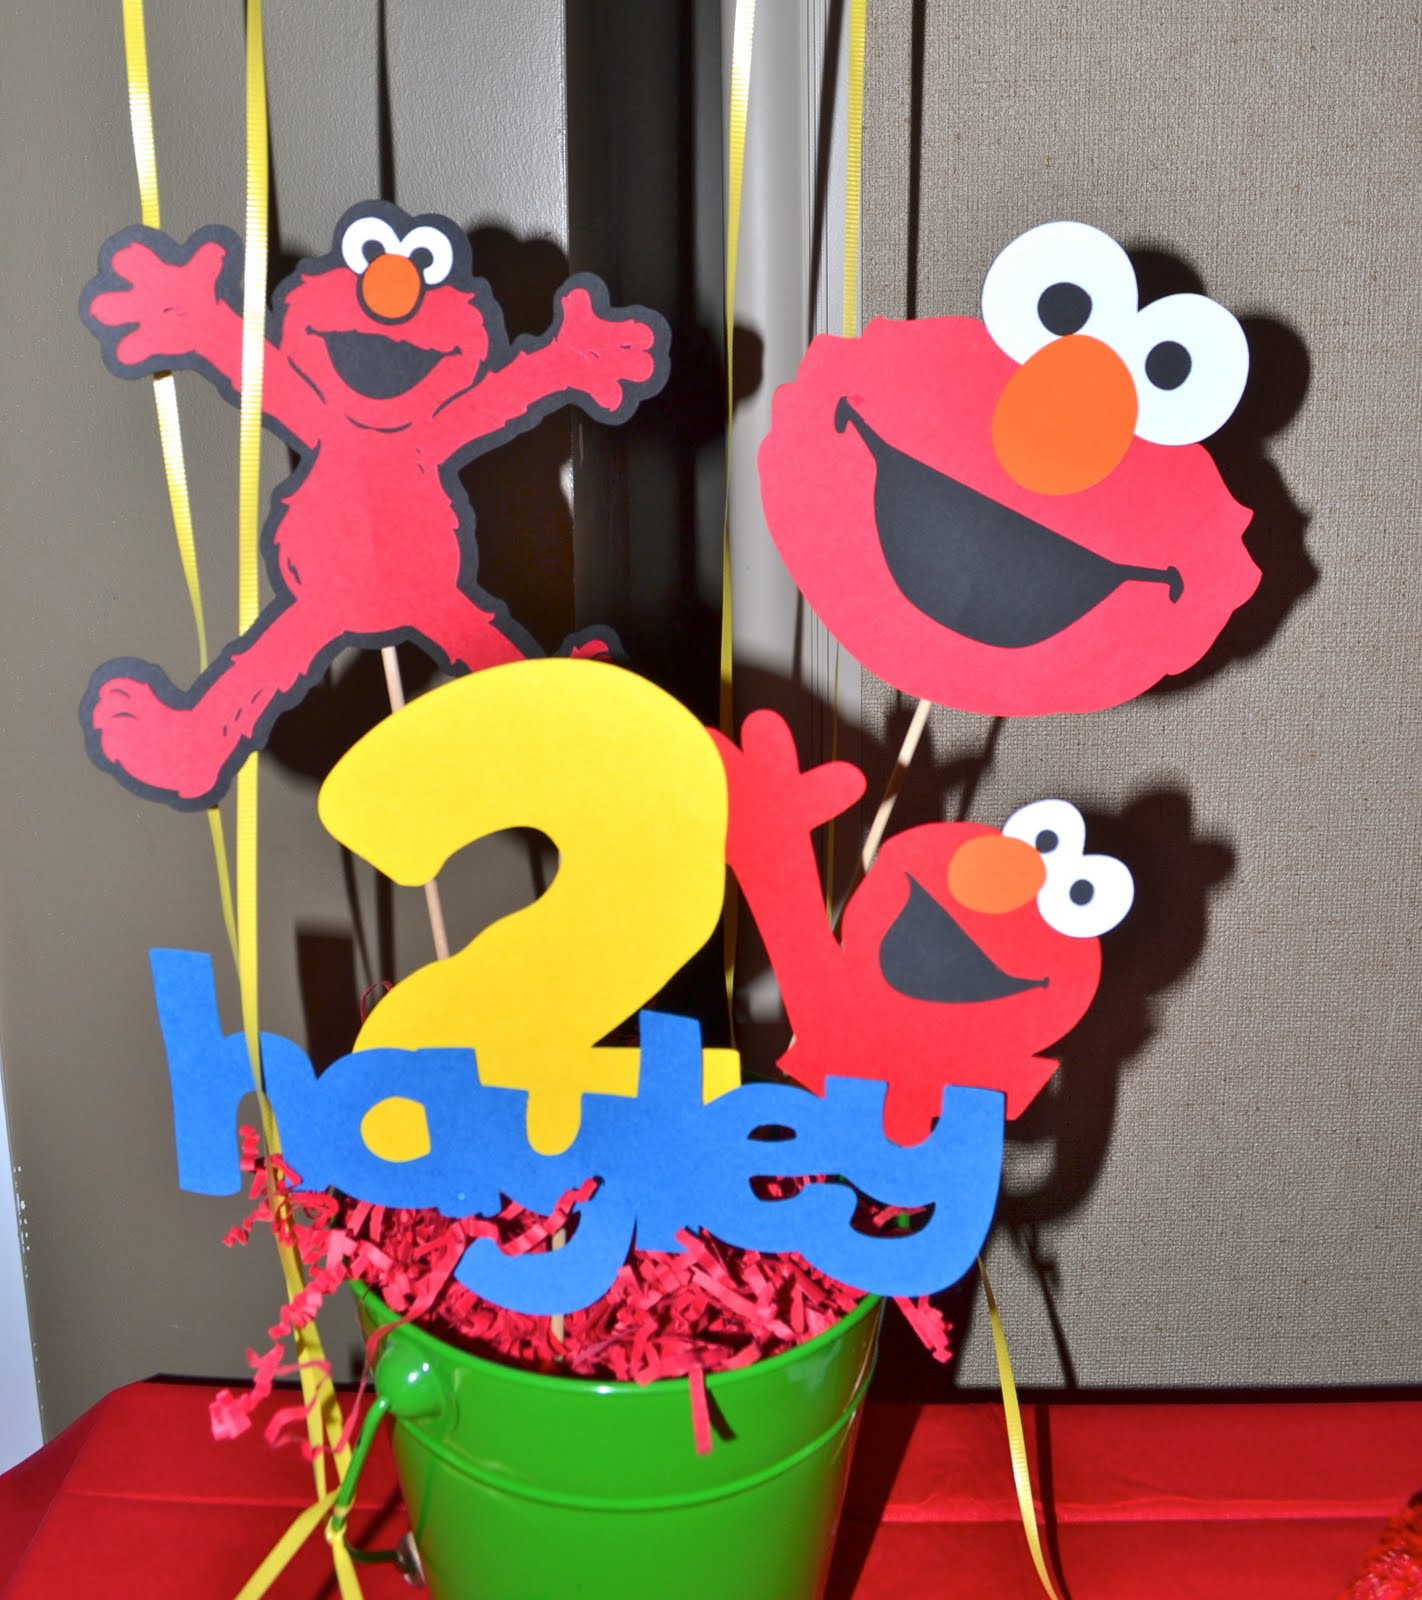 Elmo Birthday Party Decorations
 Buggy s Basement Elmo Birthday Party